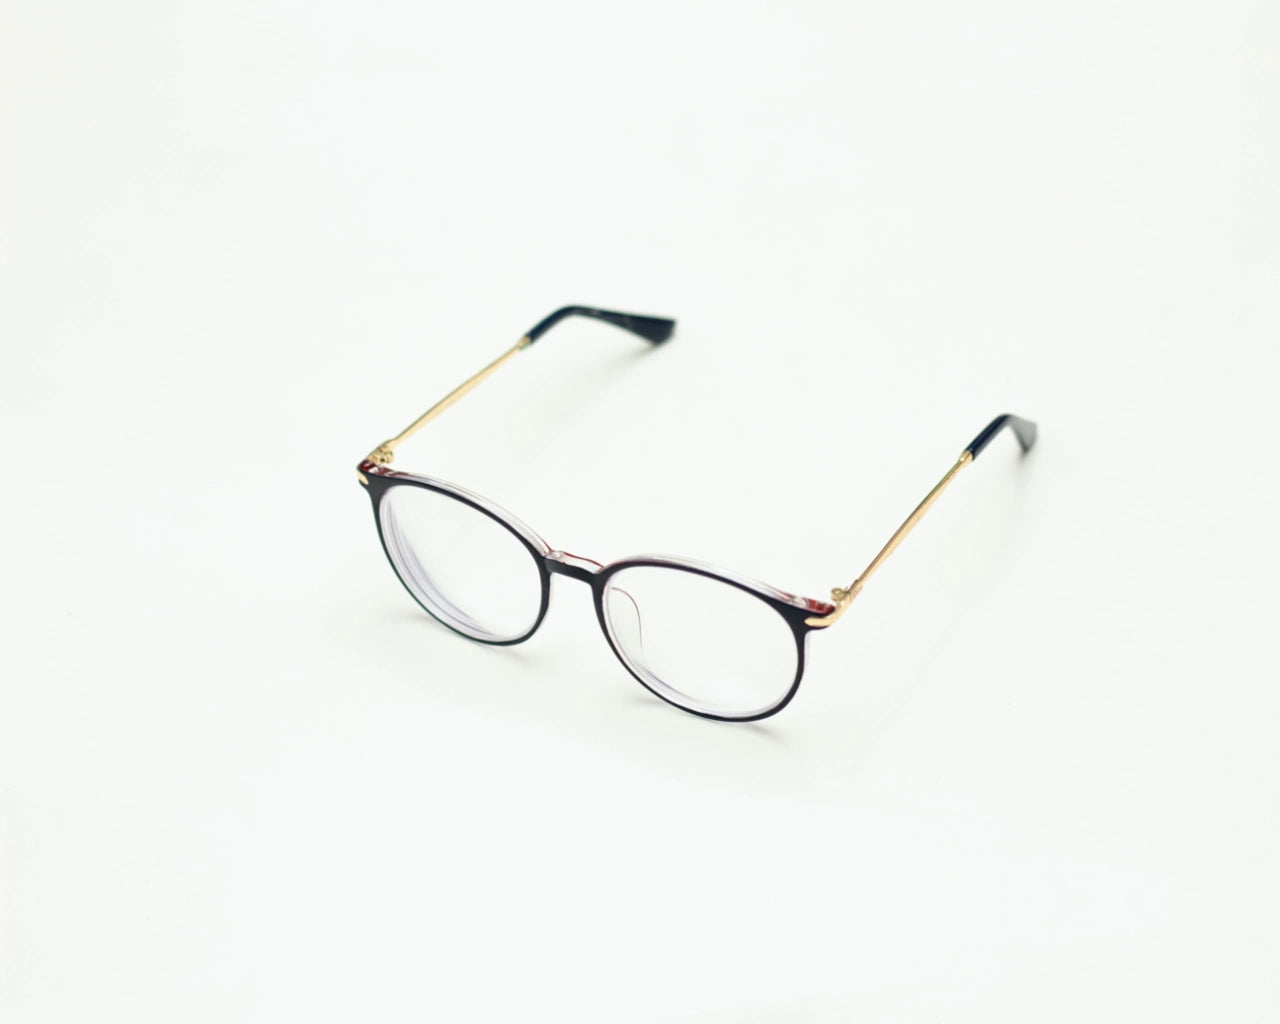 Eyeglasses on a white plain table